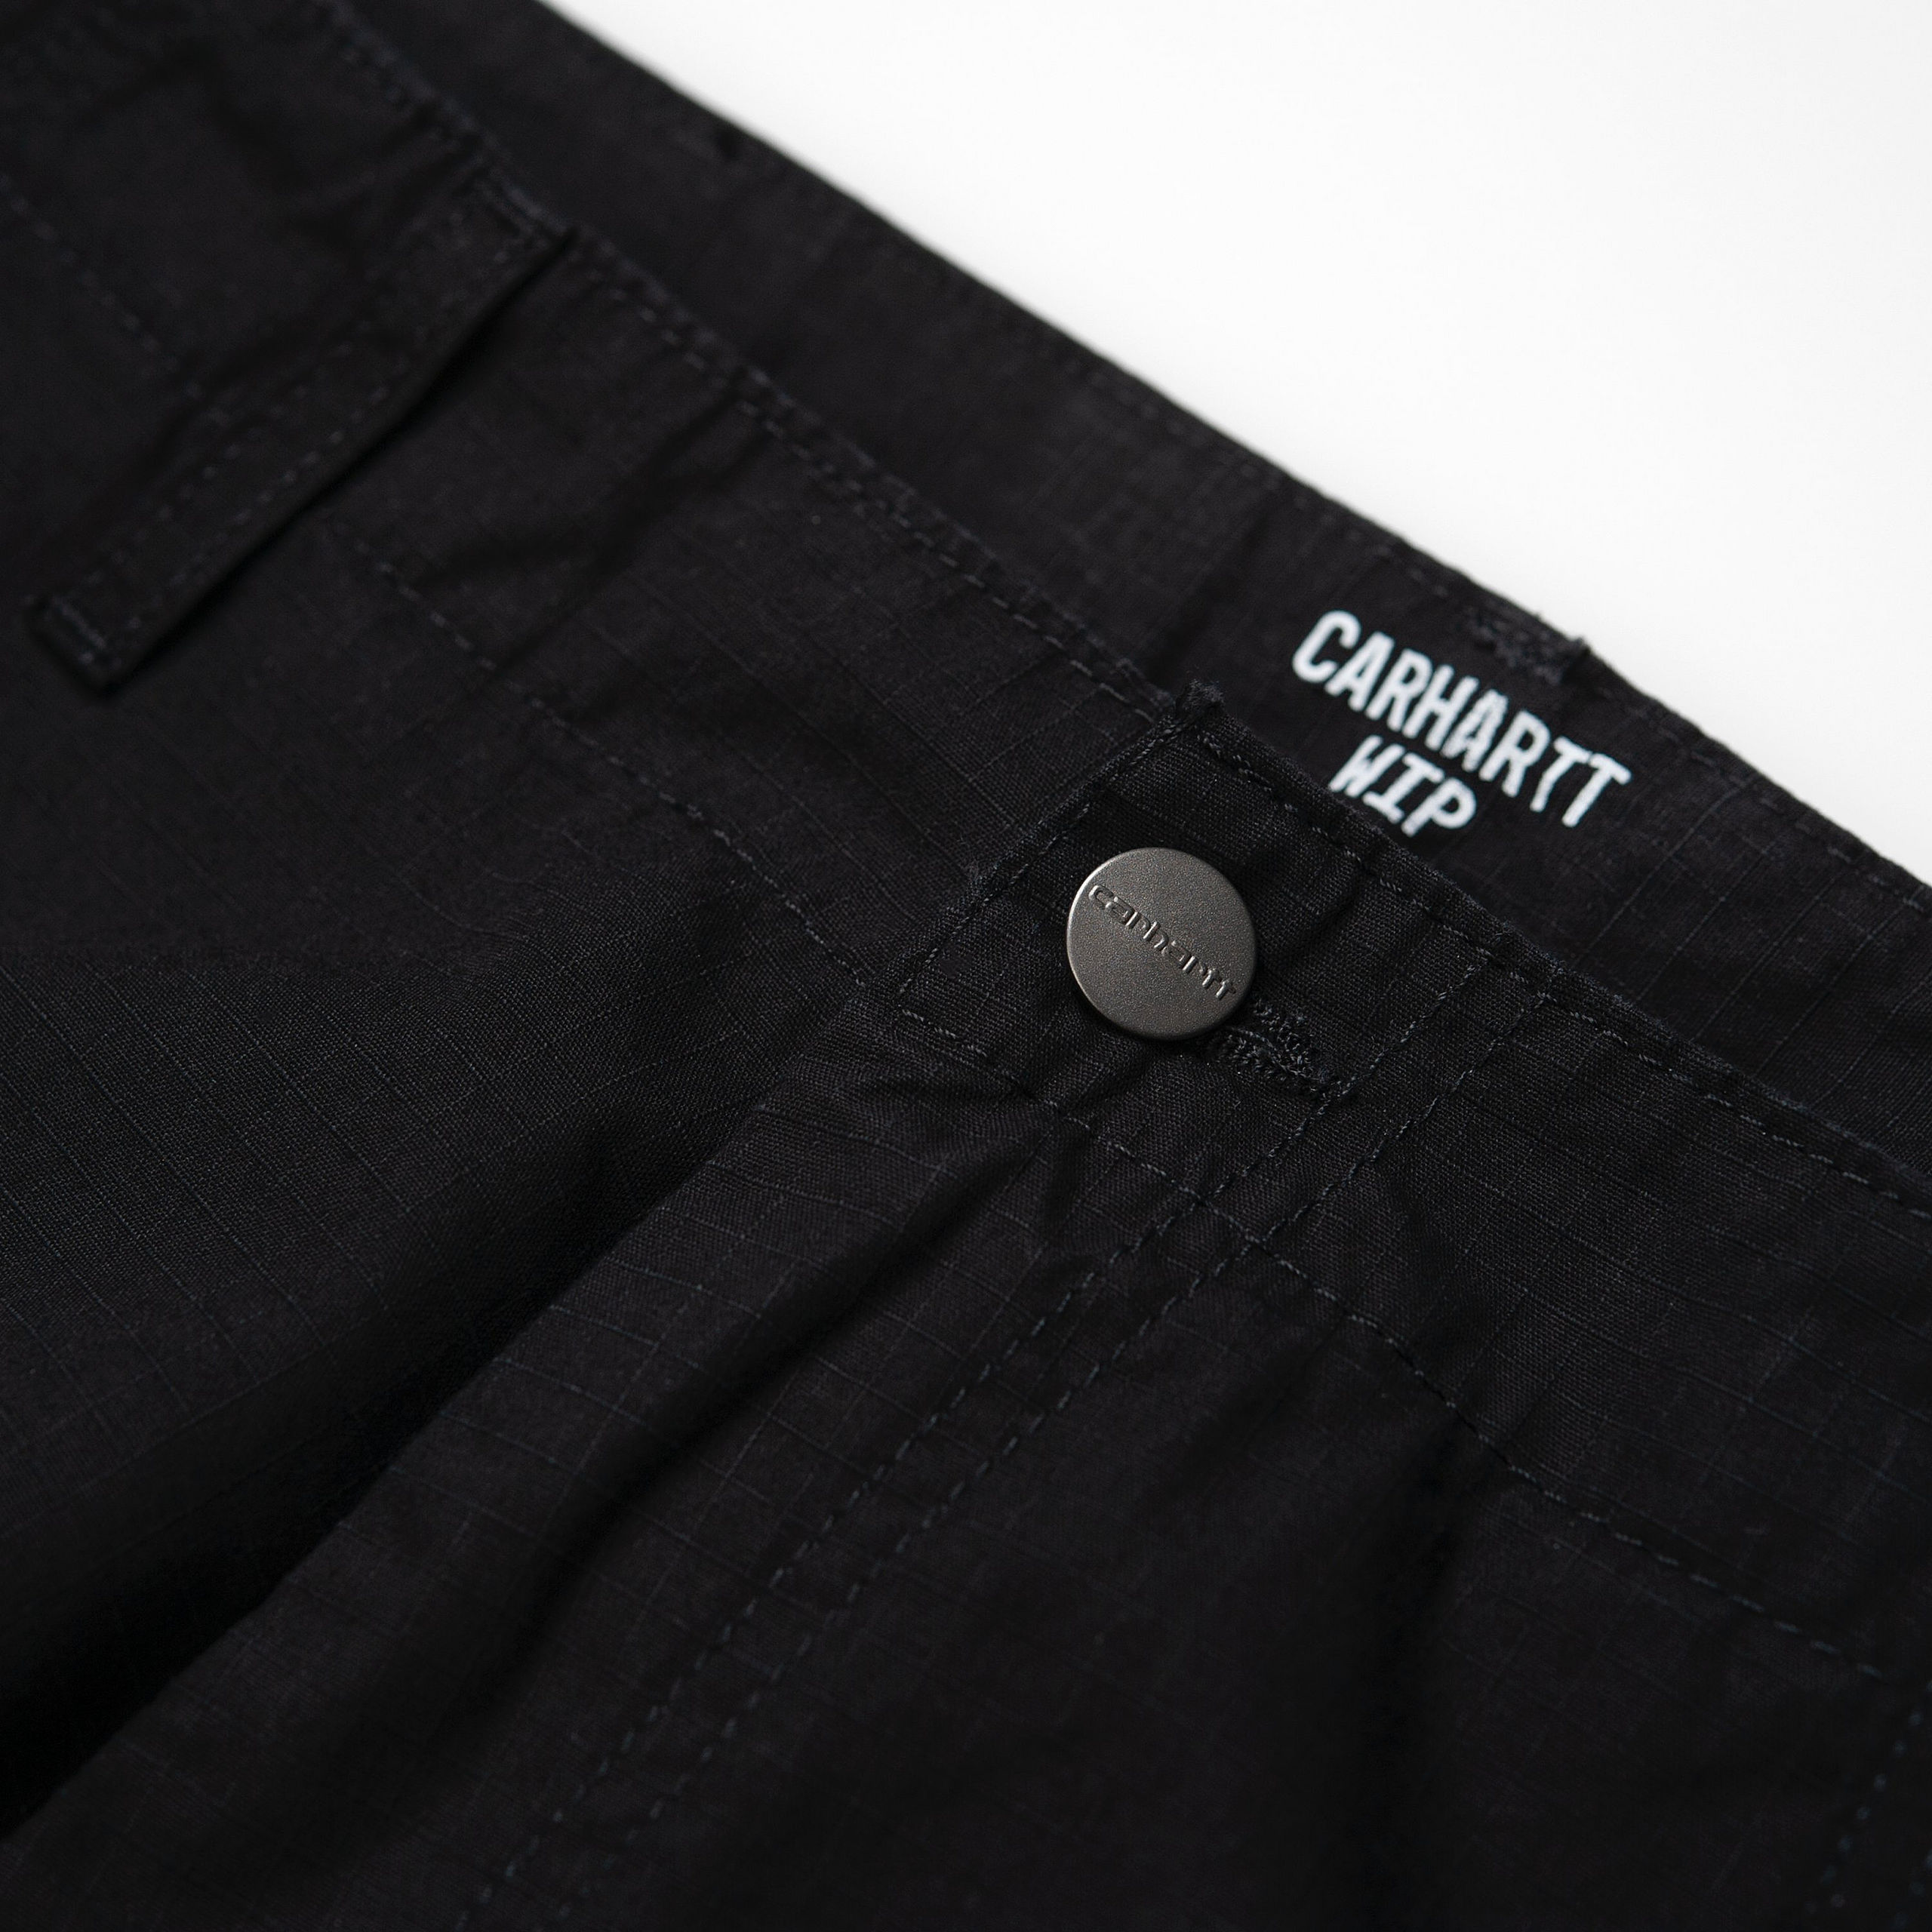 Carhartt WIP - REGULAR CARGO PANT - Black (rinsed)